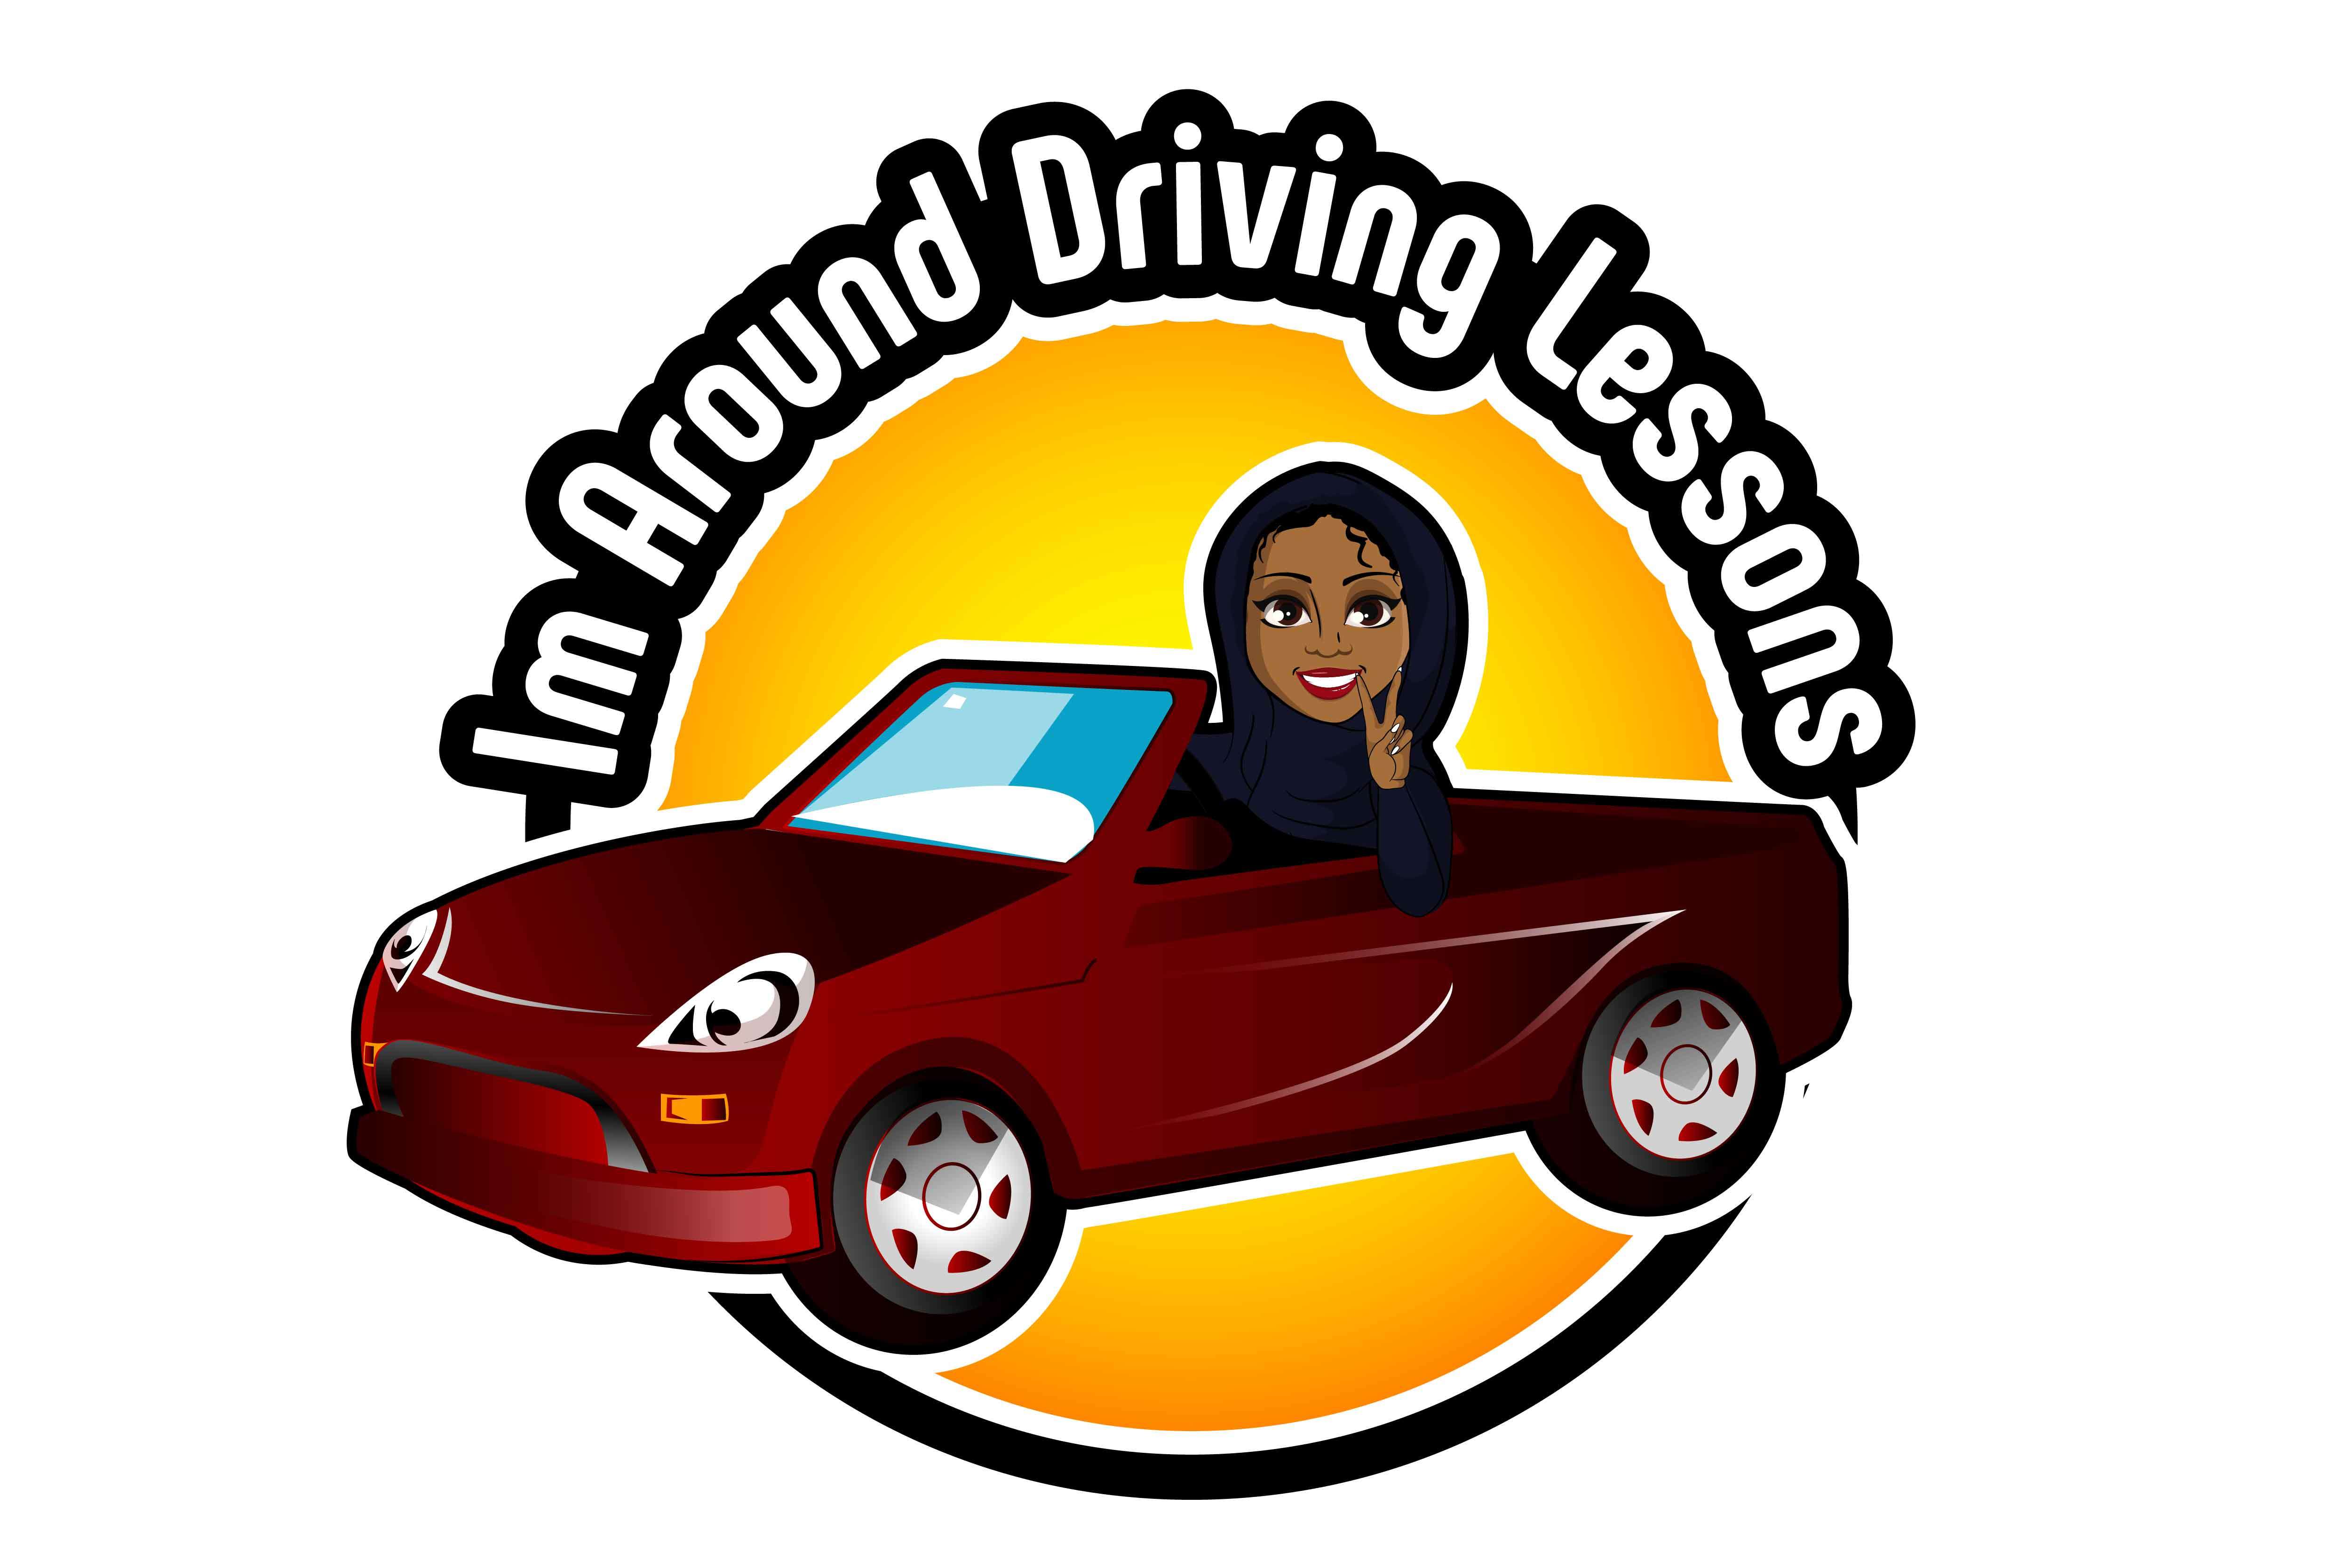 Drive around. Driving School Instagram. Driving School banner mocup. 10. Brooklyn Driving School Inc.